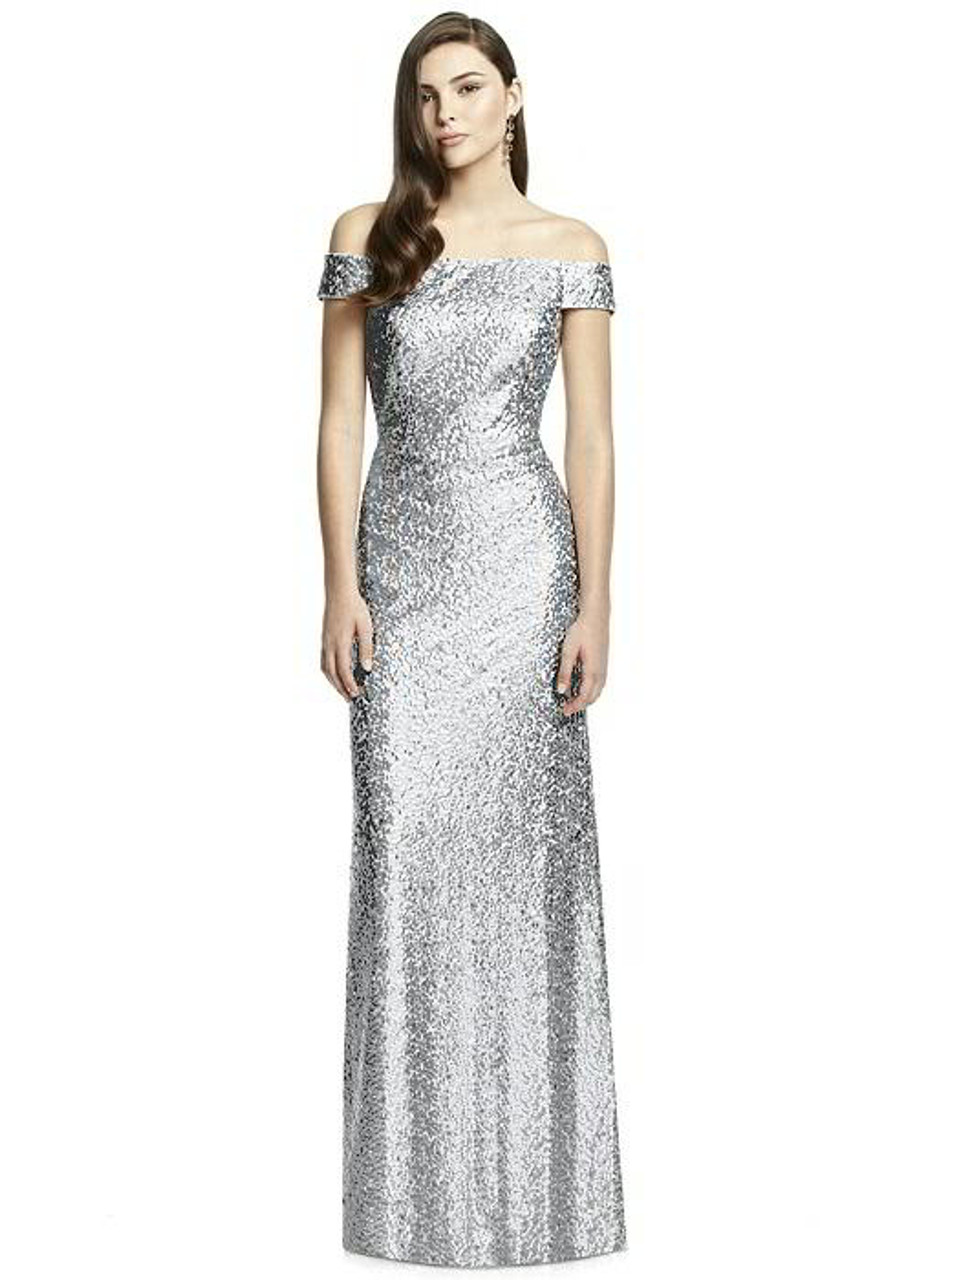 Dessy Bridesmaid Dress 3002 - Studio Sequin - Silver